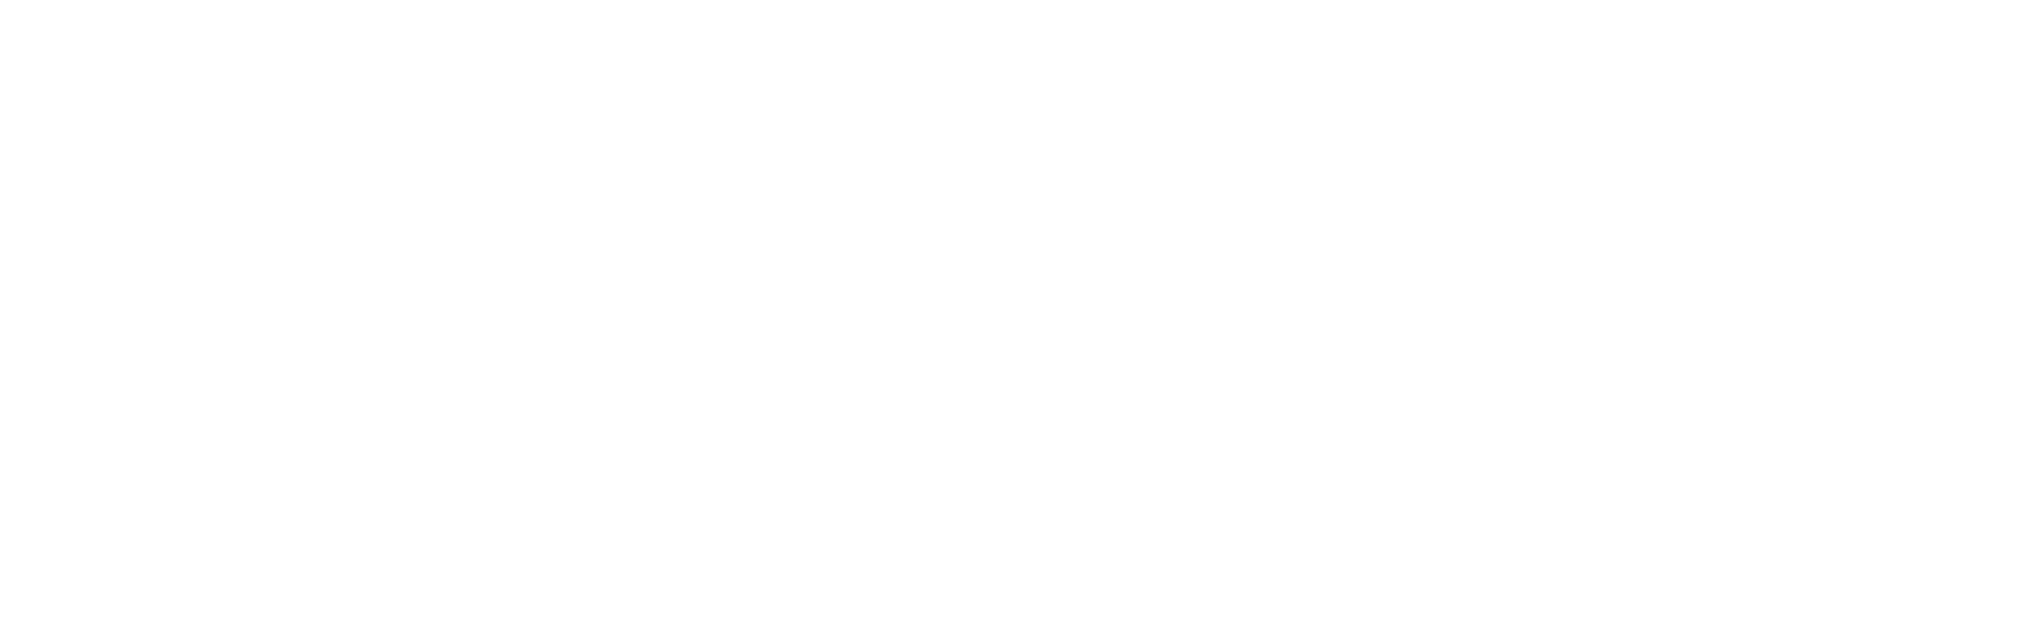 GitLab"